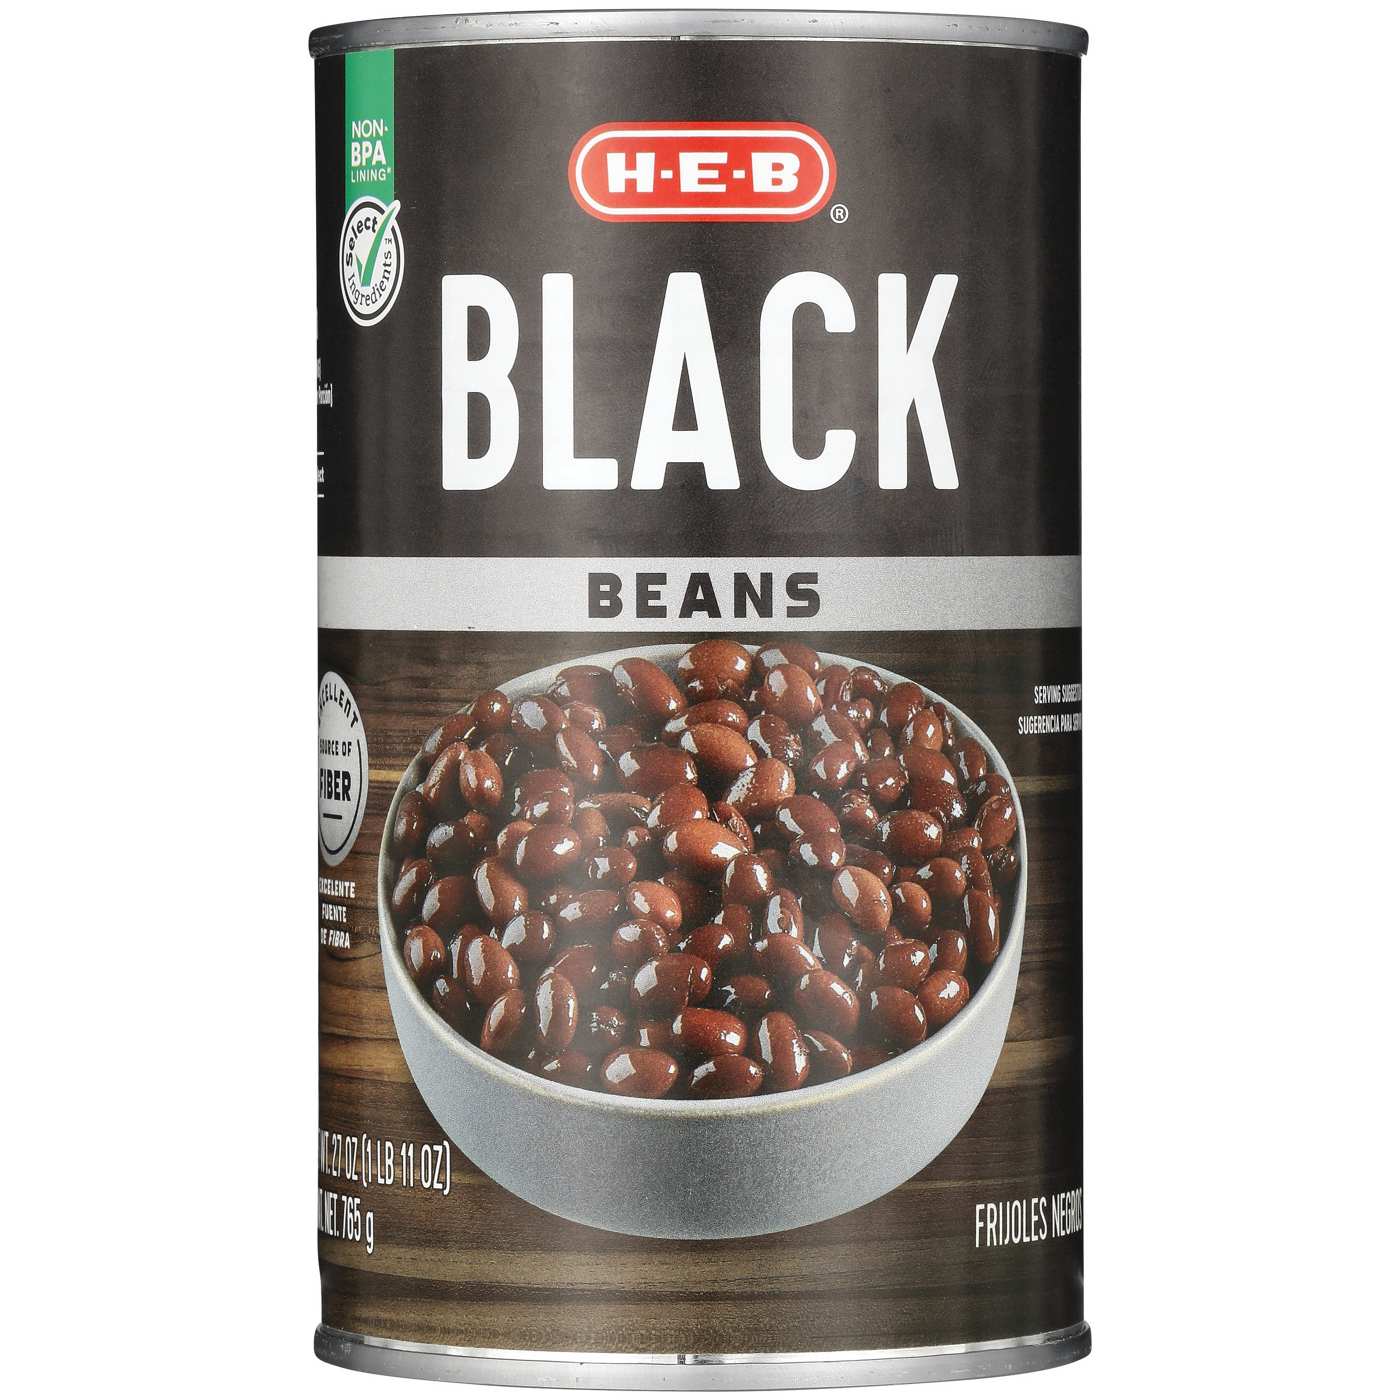 H-E-B Black Beans; image 1 of 2